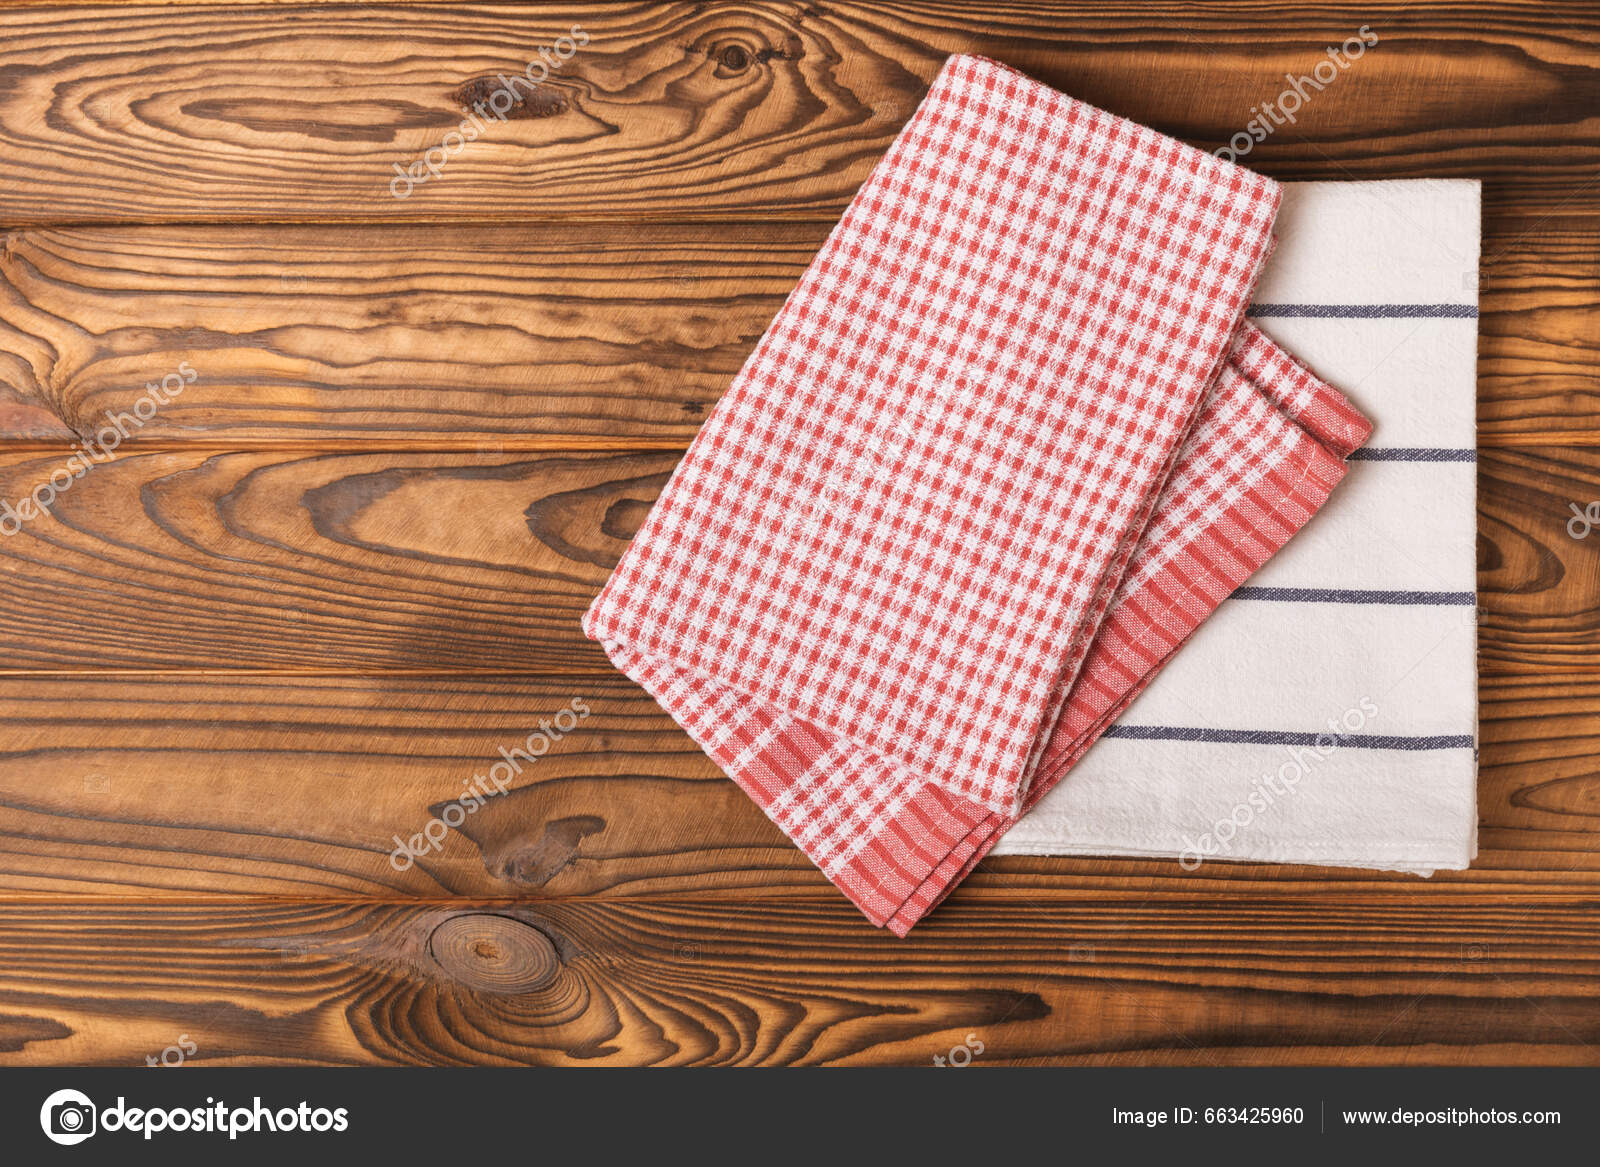 https://st5.depositphotos.com/58792602/66342/i/1600/depositphotos_663425960-stock-photo-kitchen-towels-brown-wooden-background.jpg